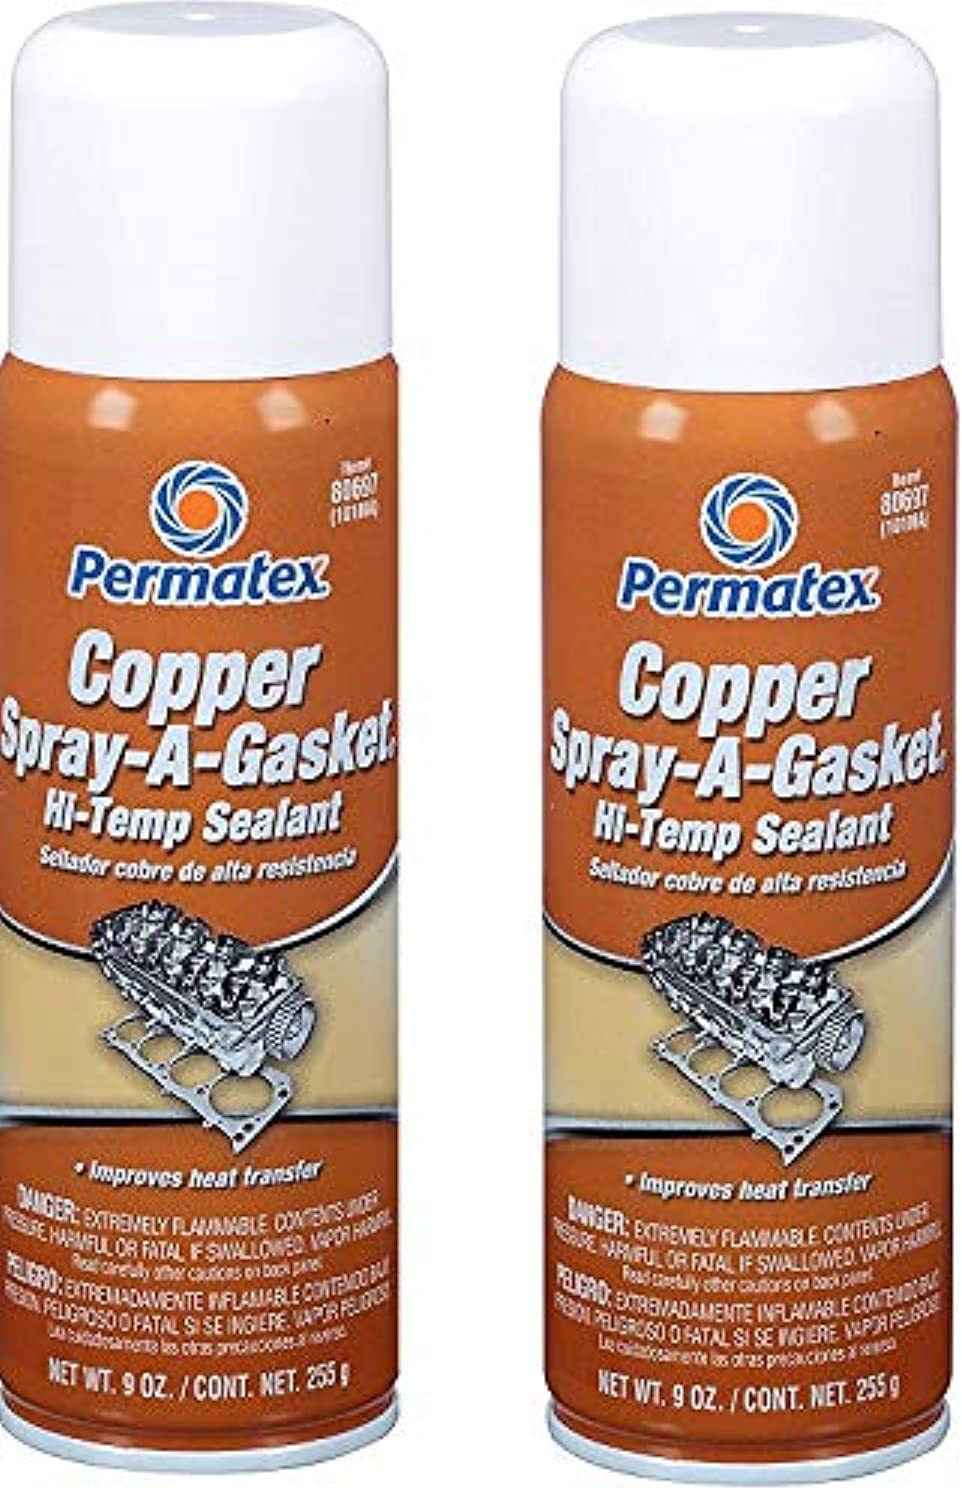 Permatex 80697 Copper Spray-A-Gasket Hi-Temp Adhesive Sealant 9Oz (Pack of 2)